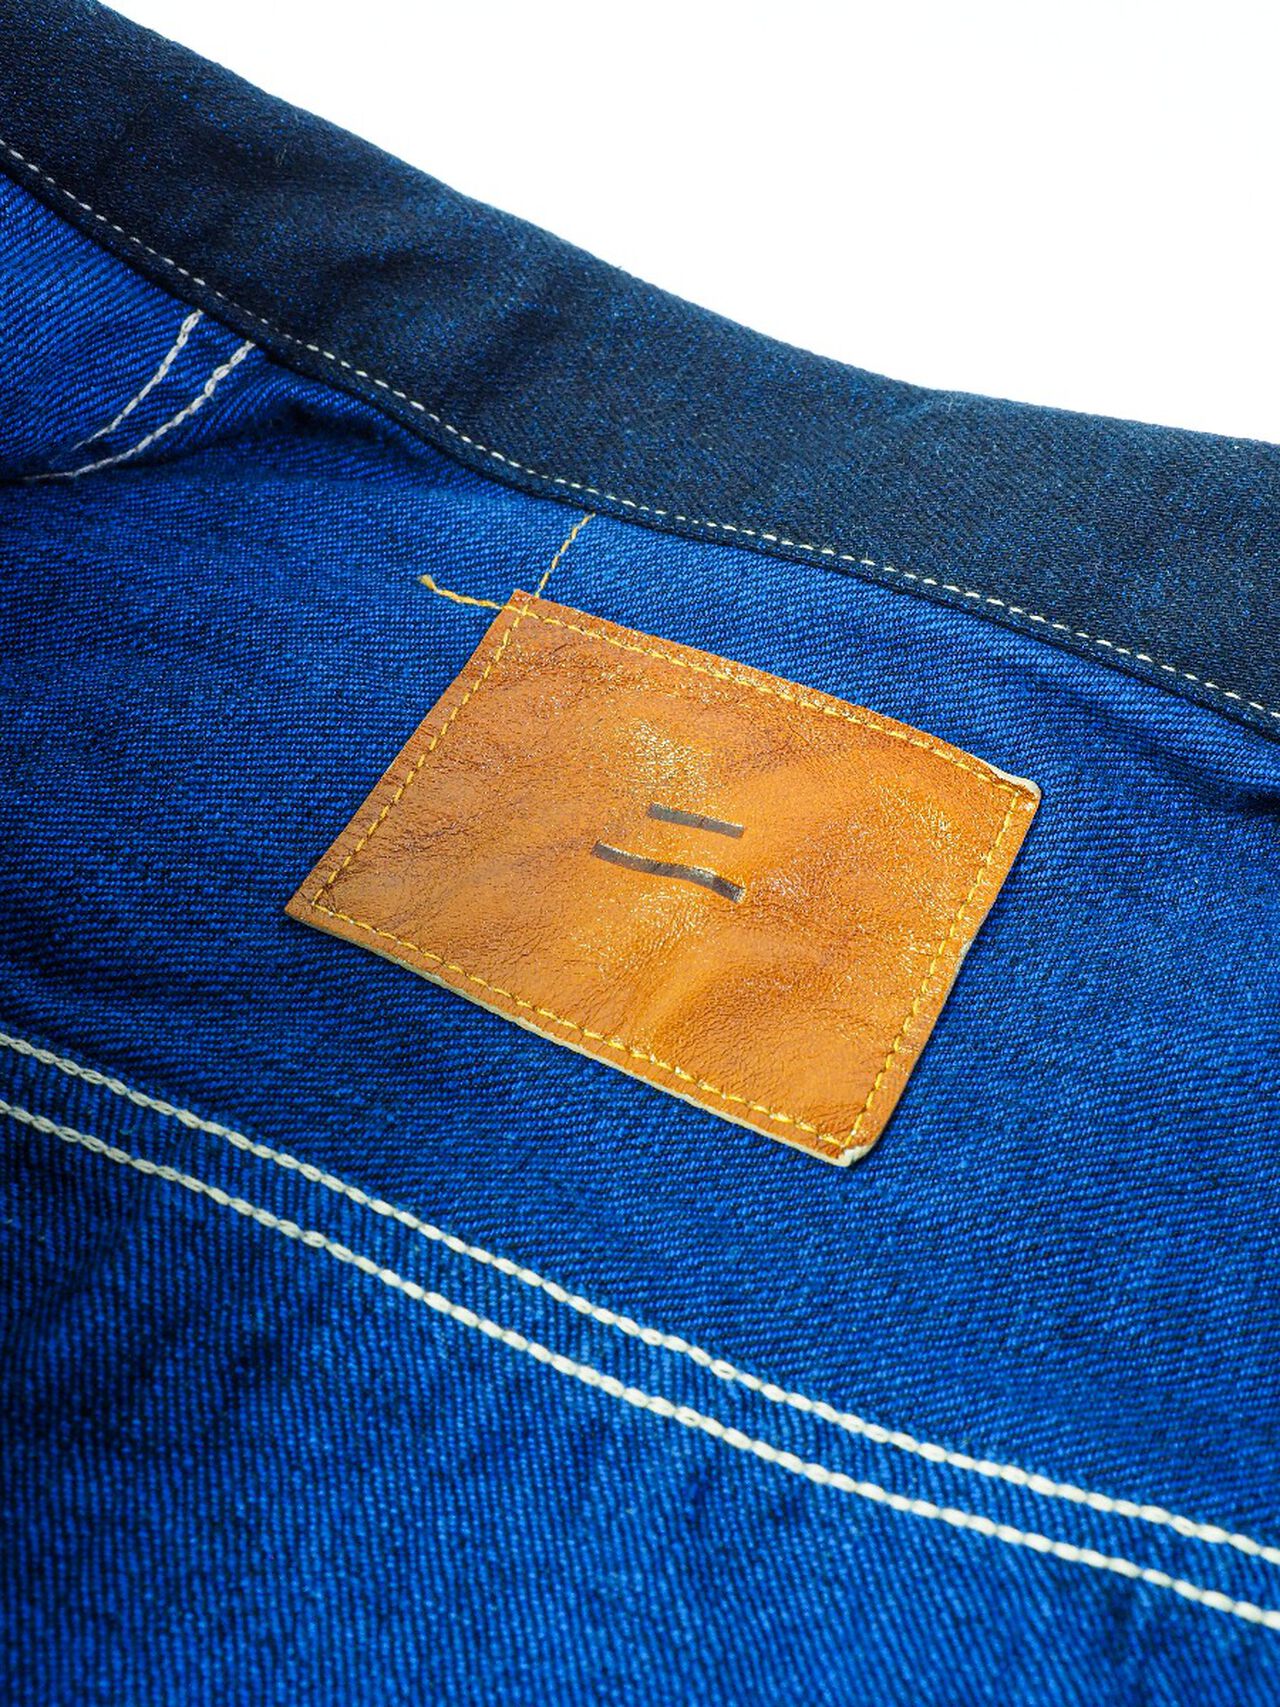 YUJKT2 16.5oz Natural Indigo "Yurai" 2nd type Jacket with handwarmers-46-One Wash,, large image number 6